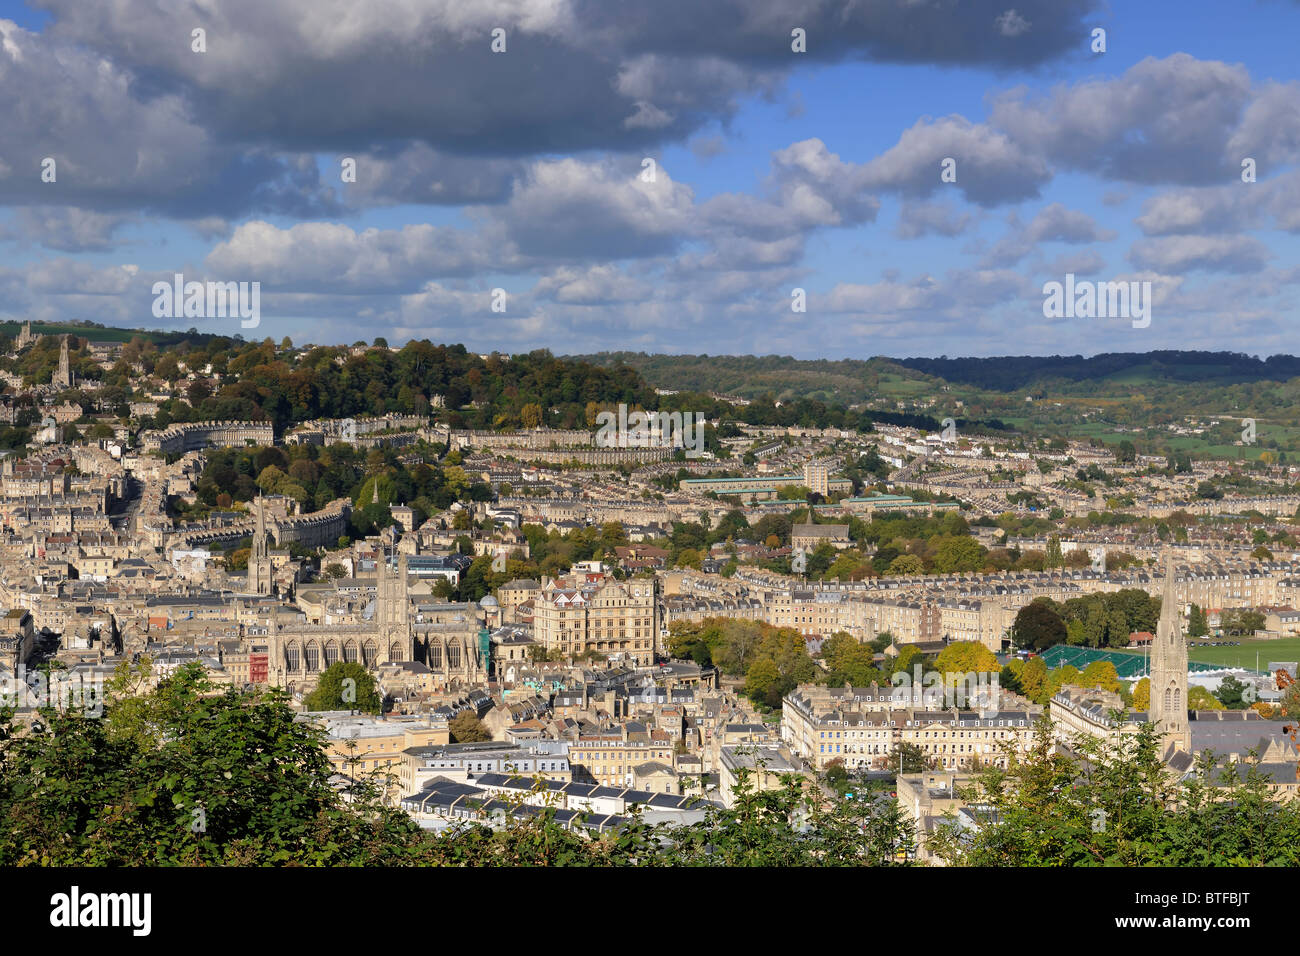 Cityscape - City of Bath, Somerset, England Stock Photo